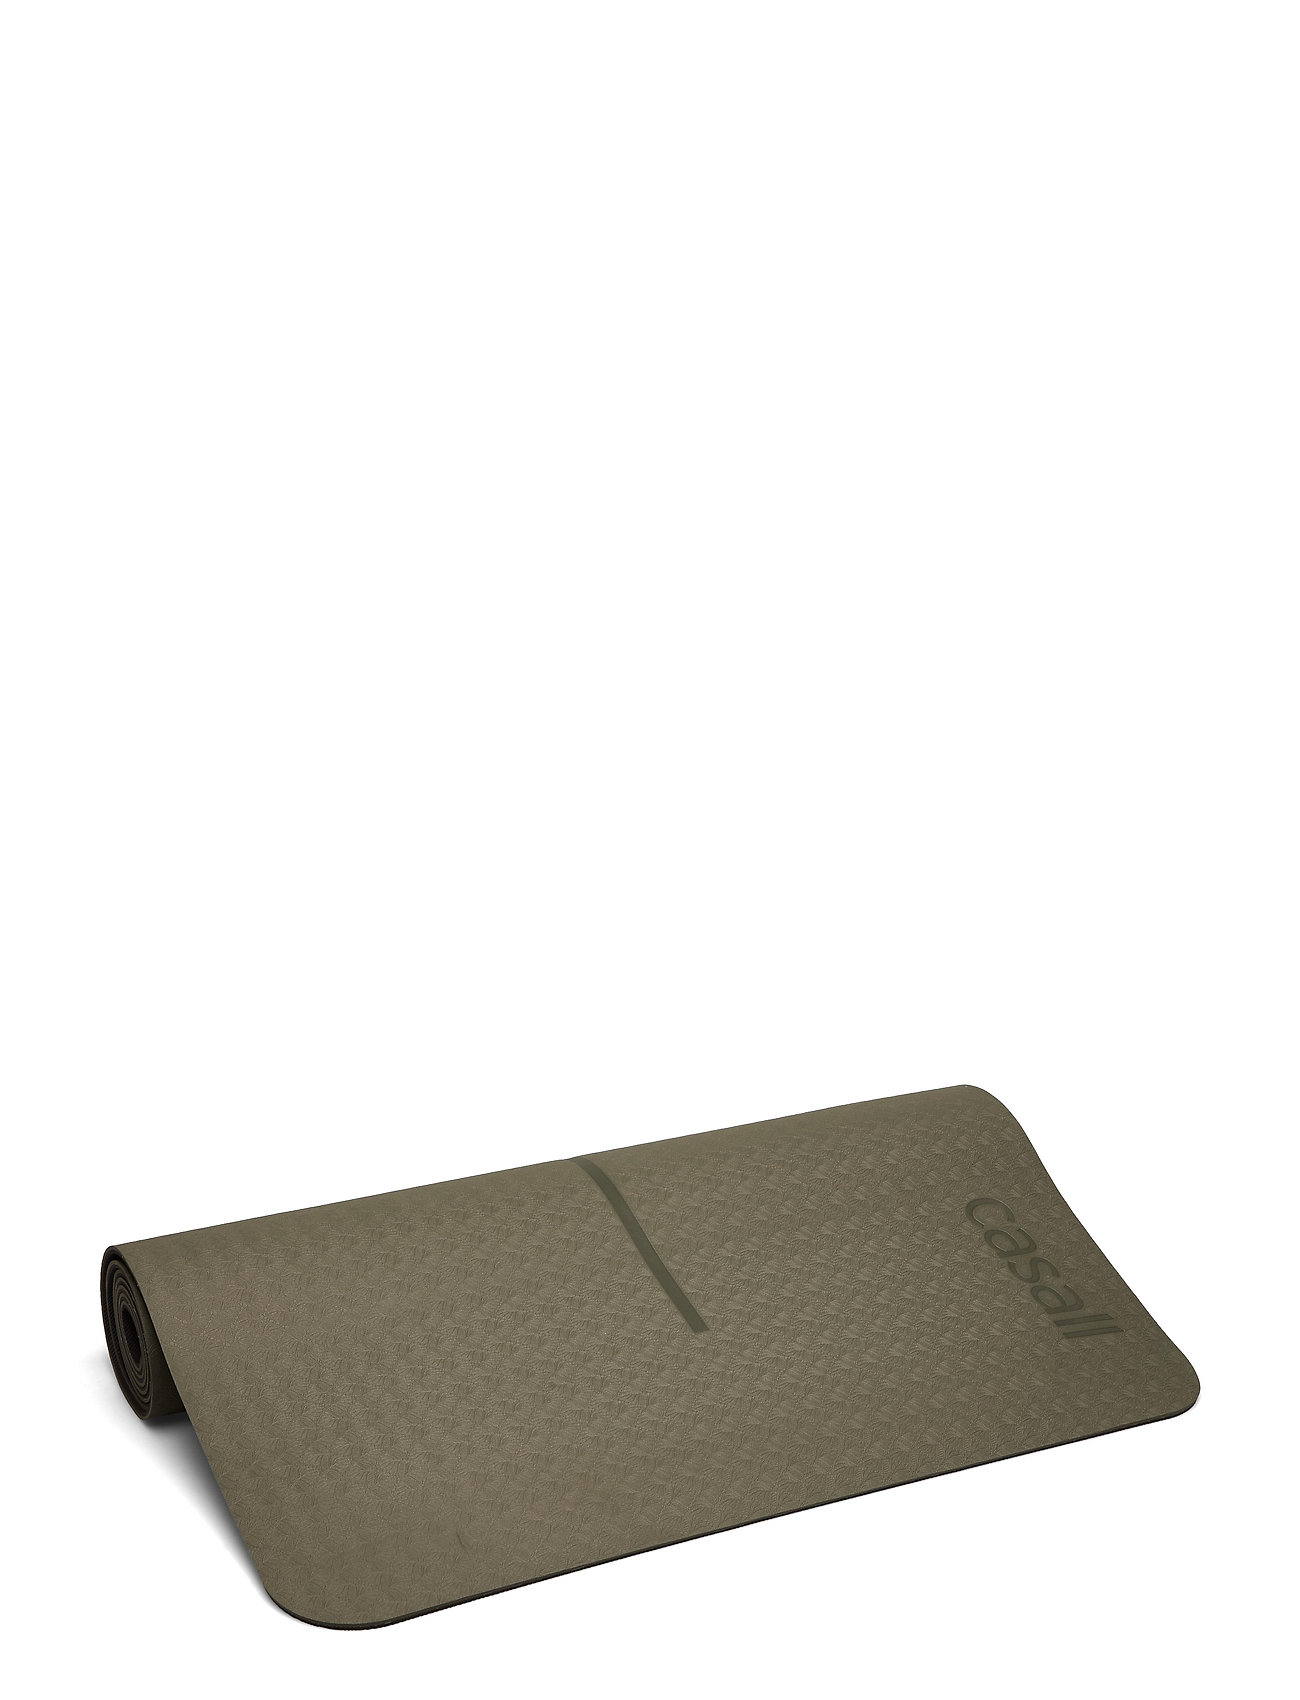 Yoga mat position 4mm